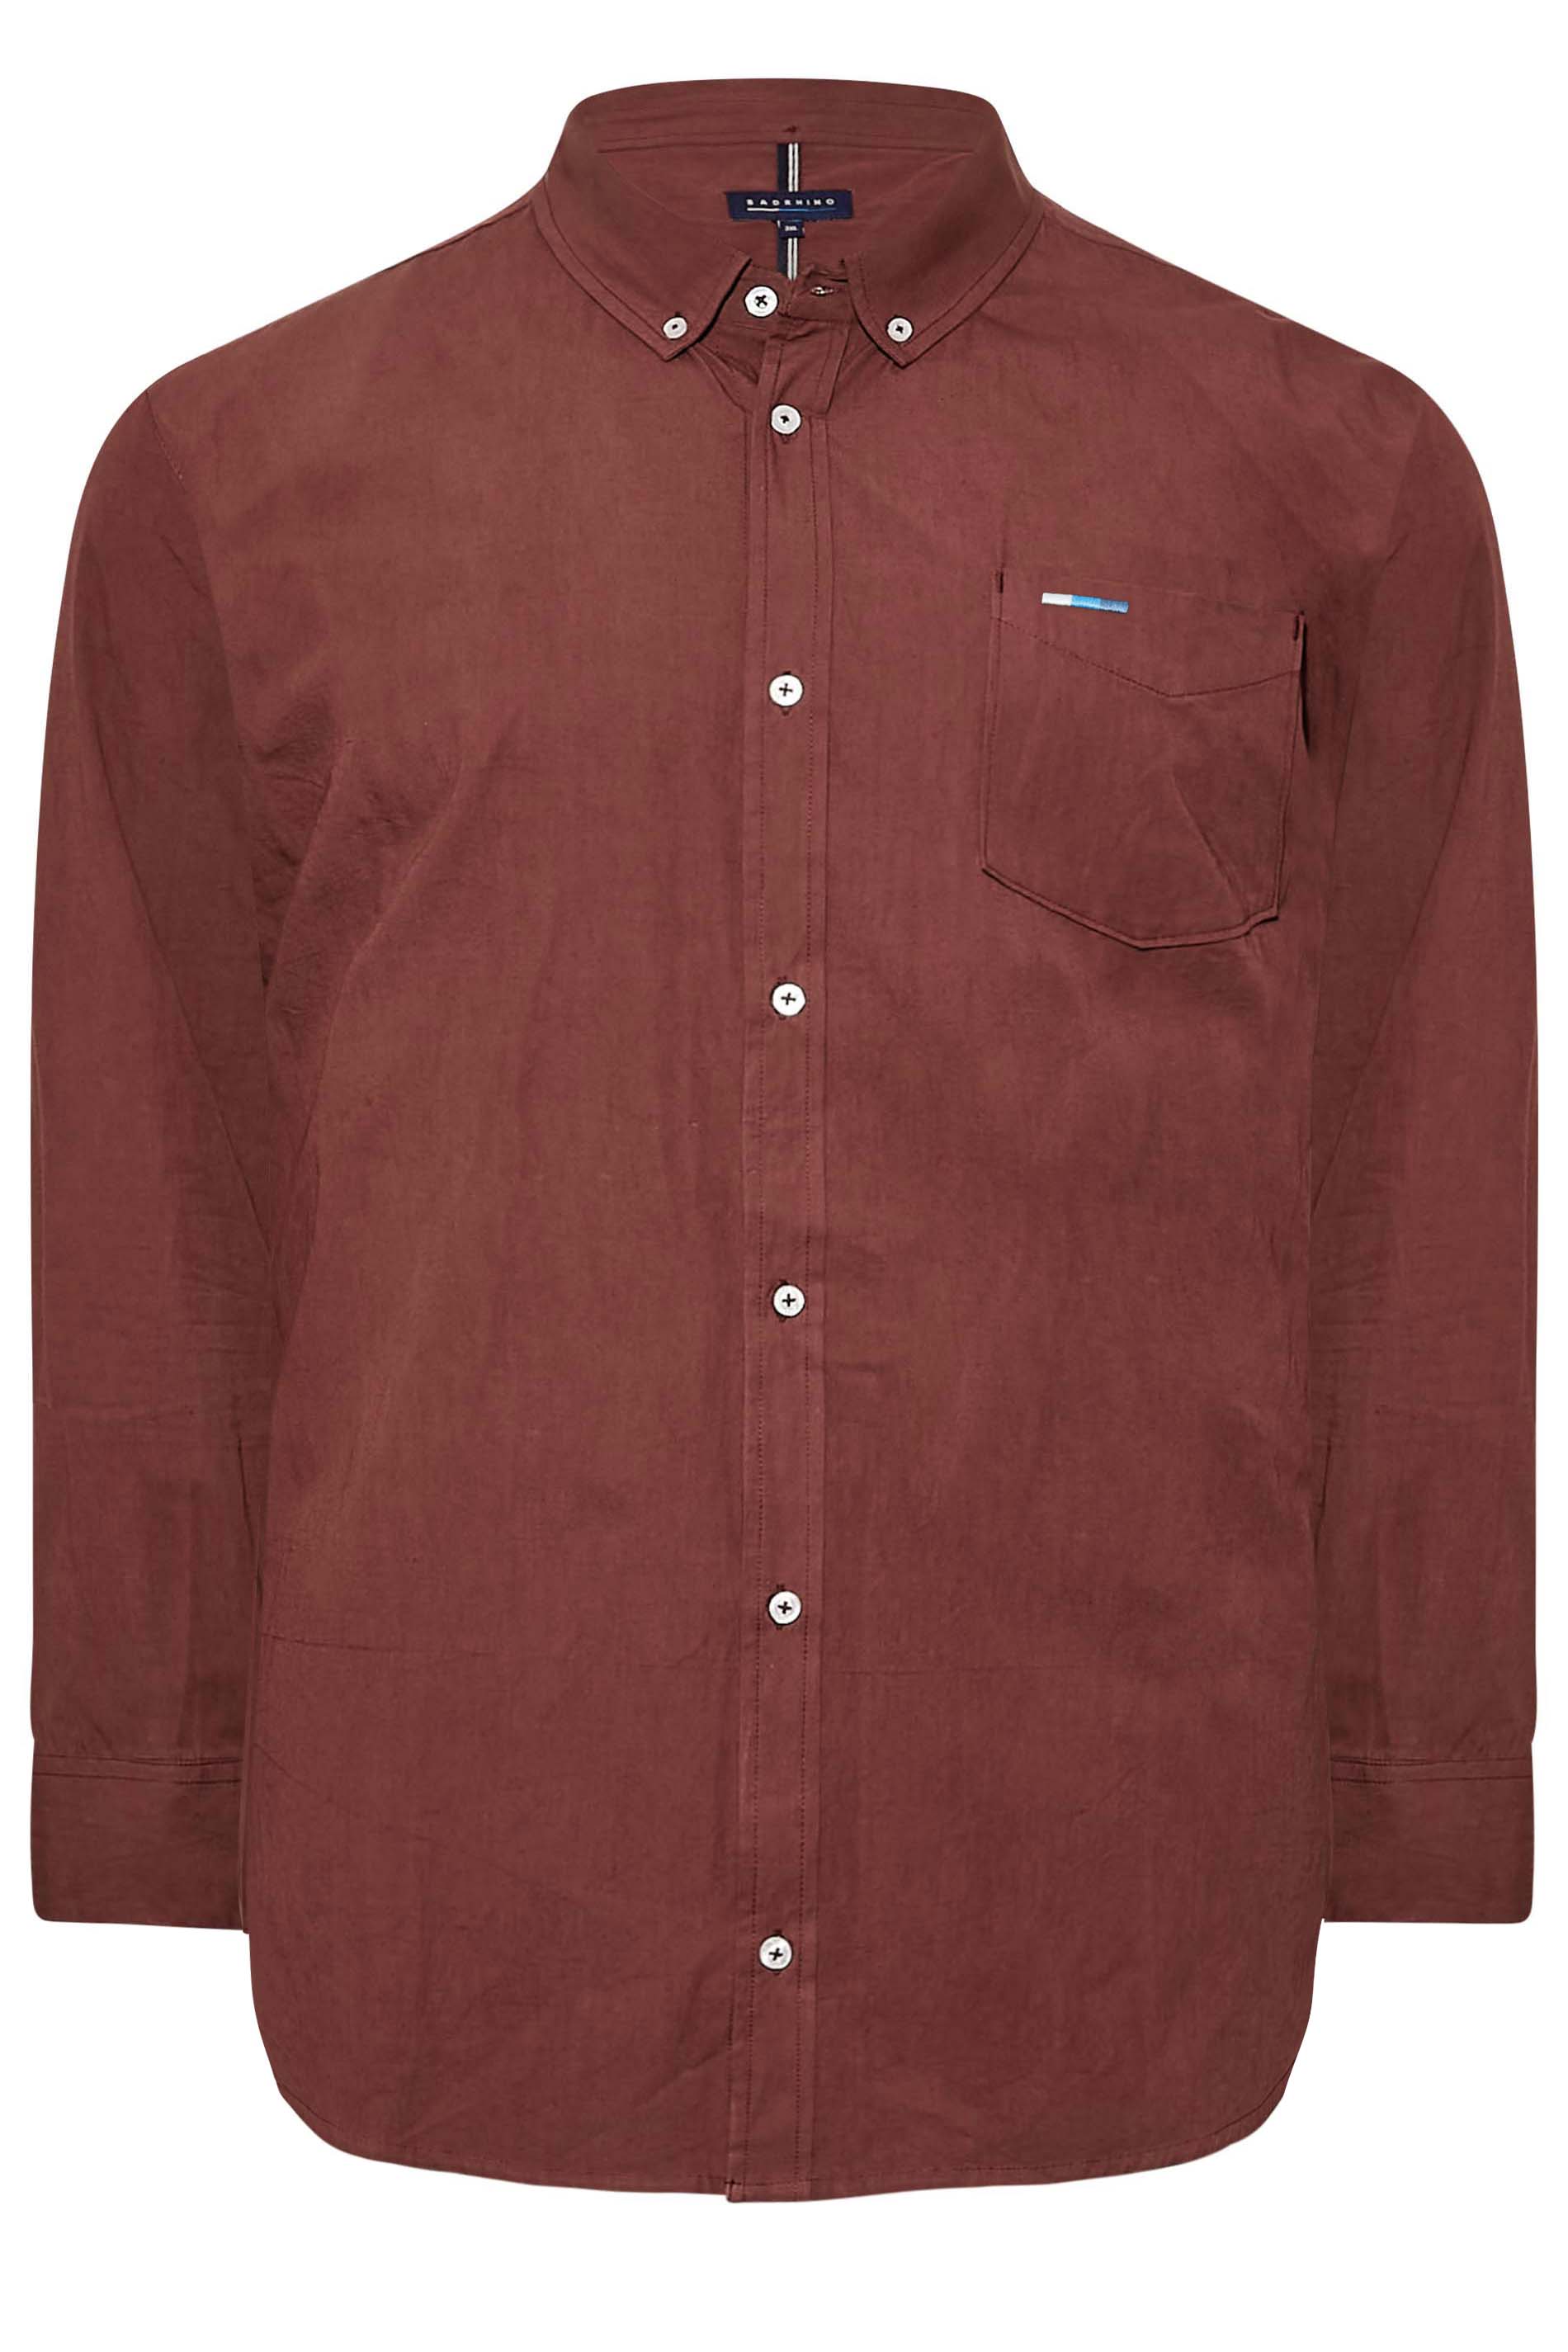 BadRhino Big & Tall Burgundy Red Long Sleeve Oxford Shirt | BadRhino 3